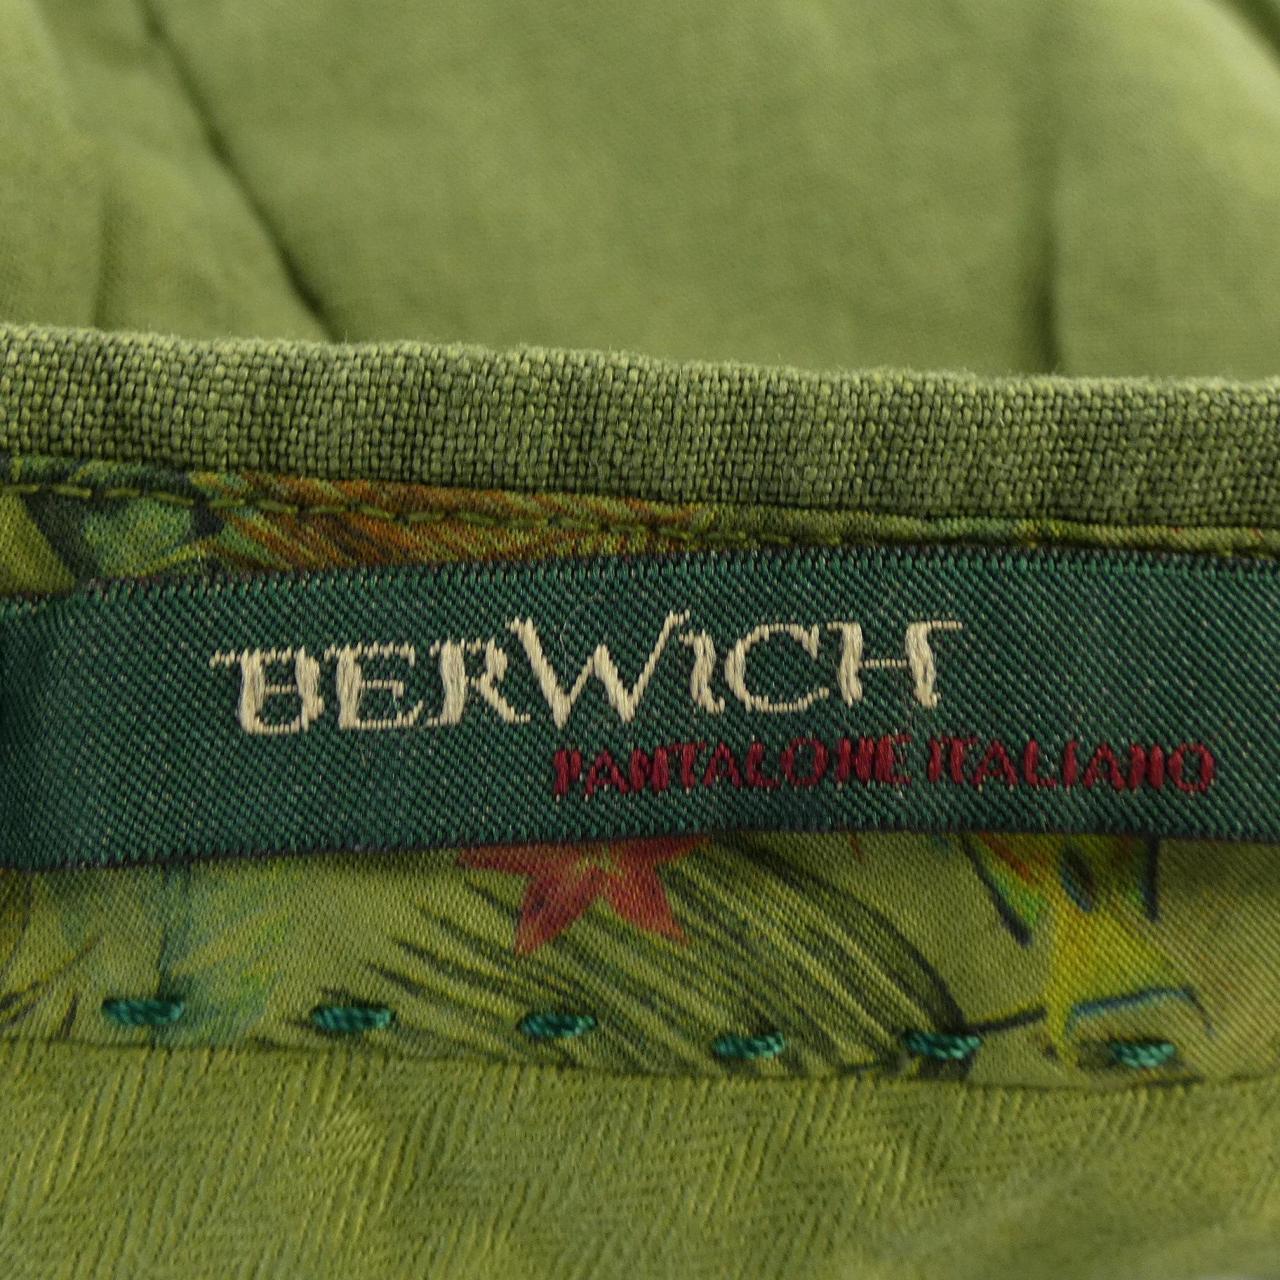 Berwich BERWICH裤子